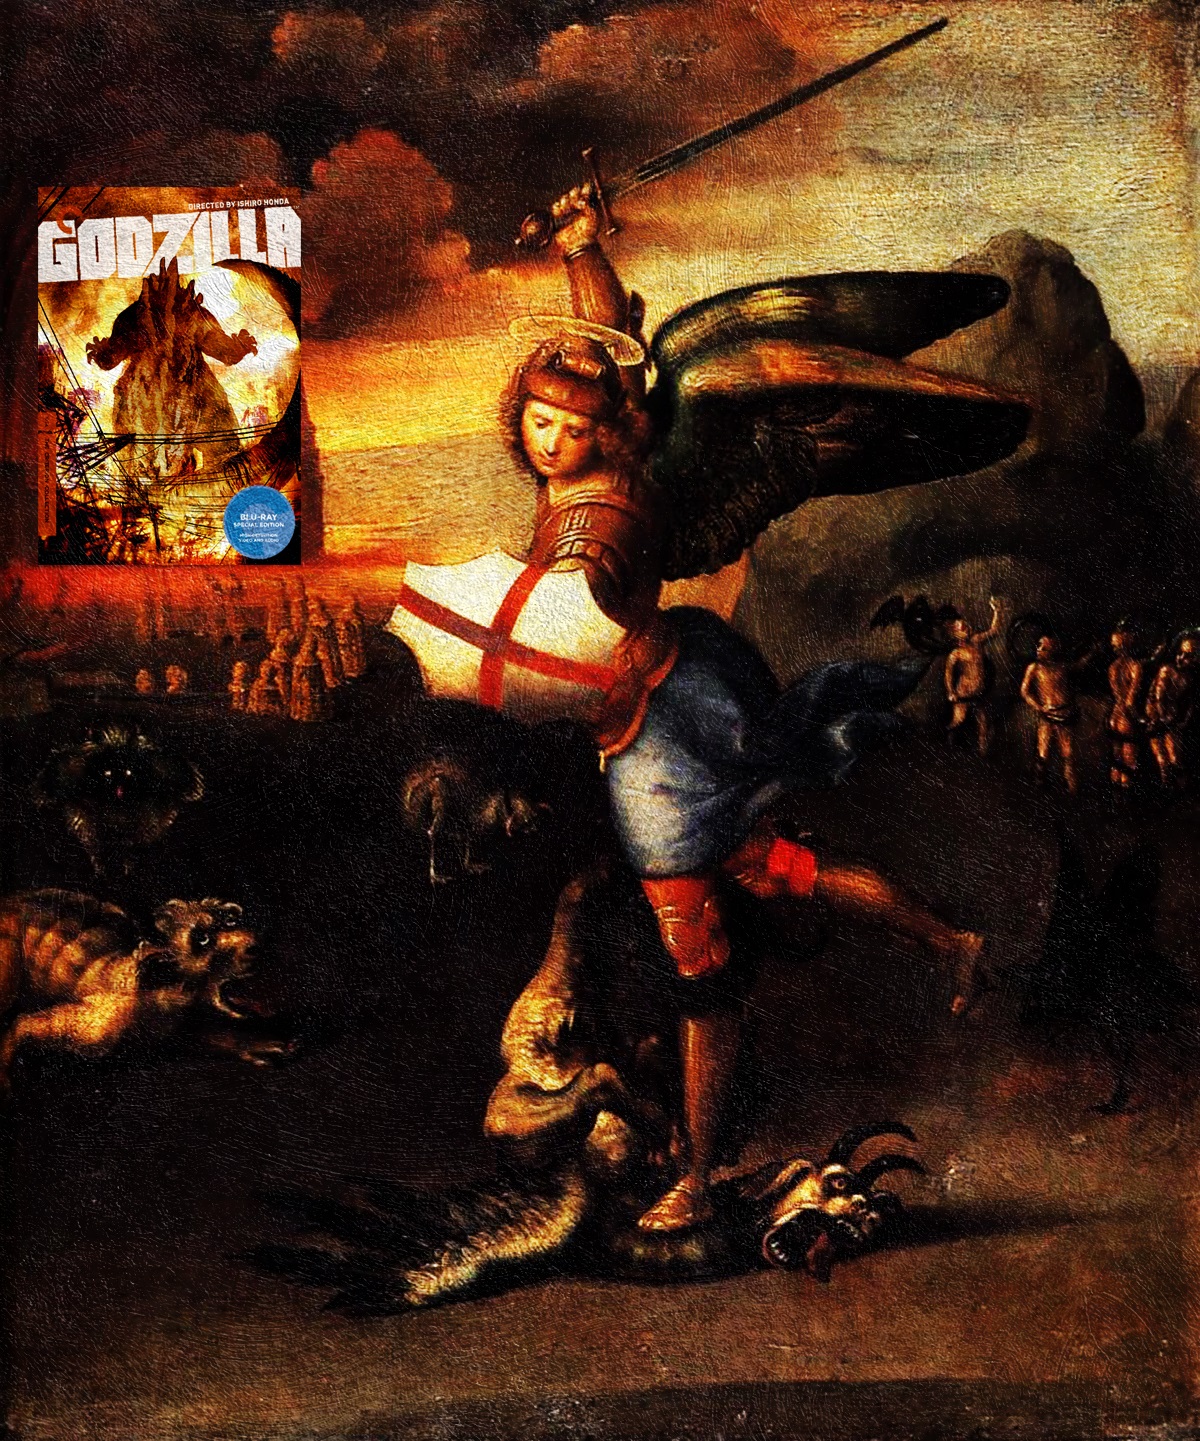 Godzilla by Ishirō Honda  + St. Michael Slaying the Devil by Raphael